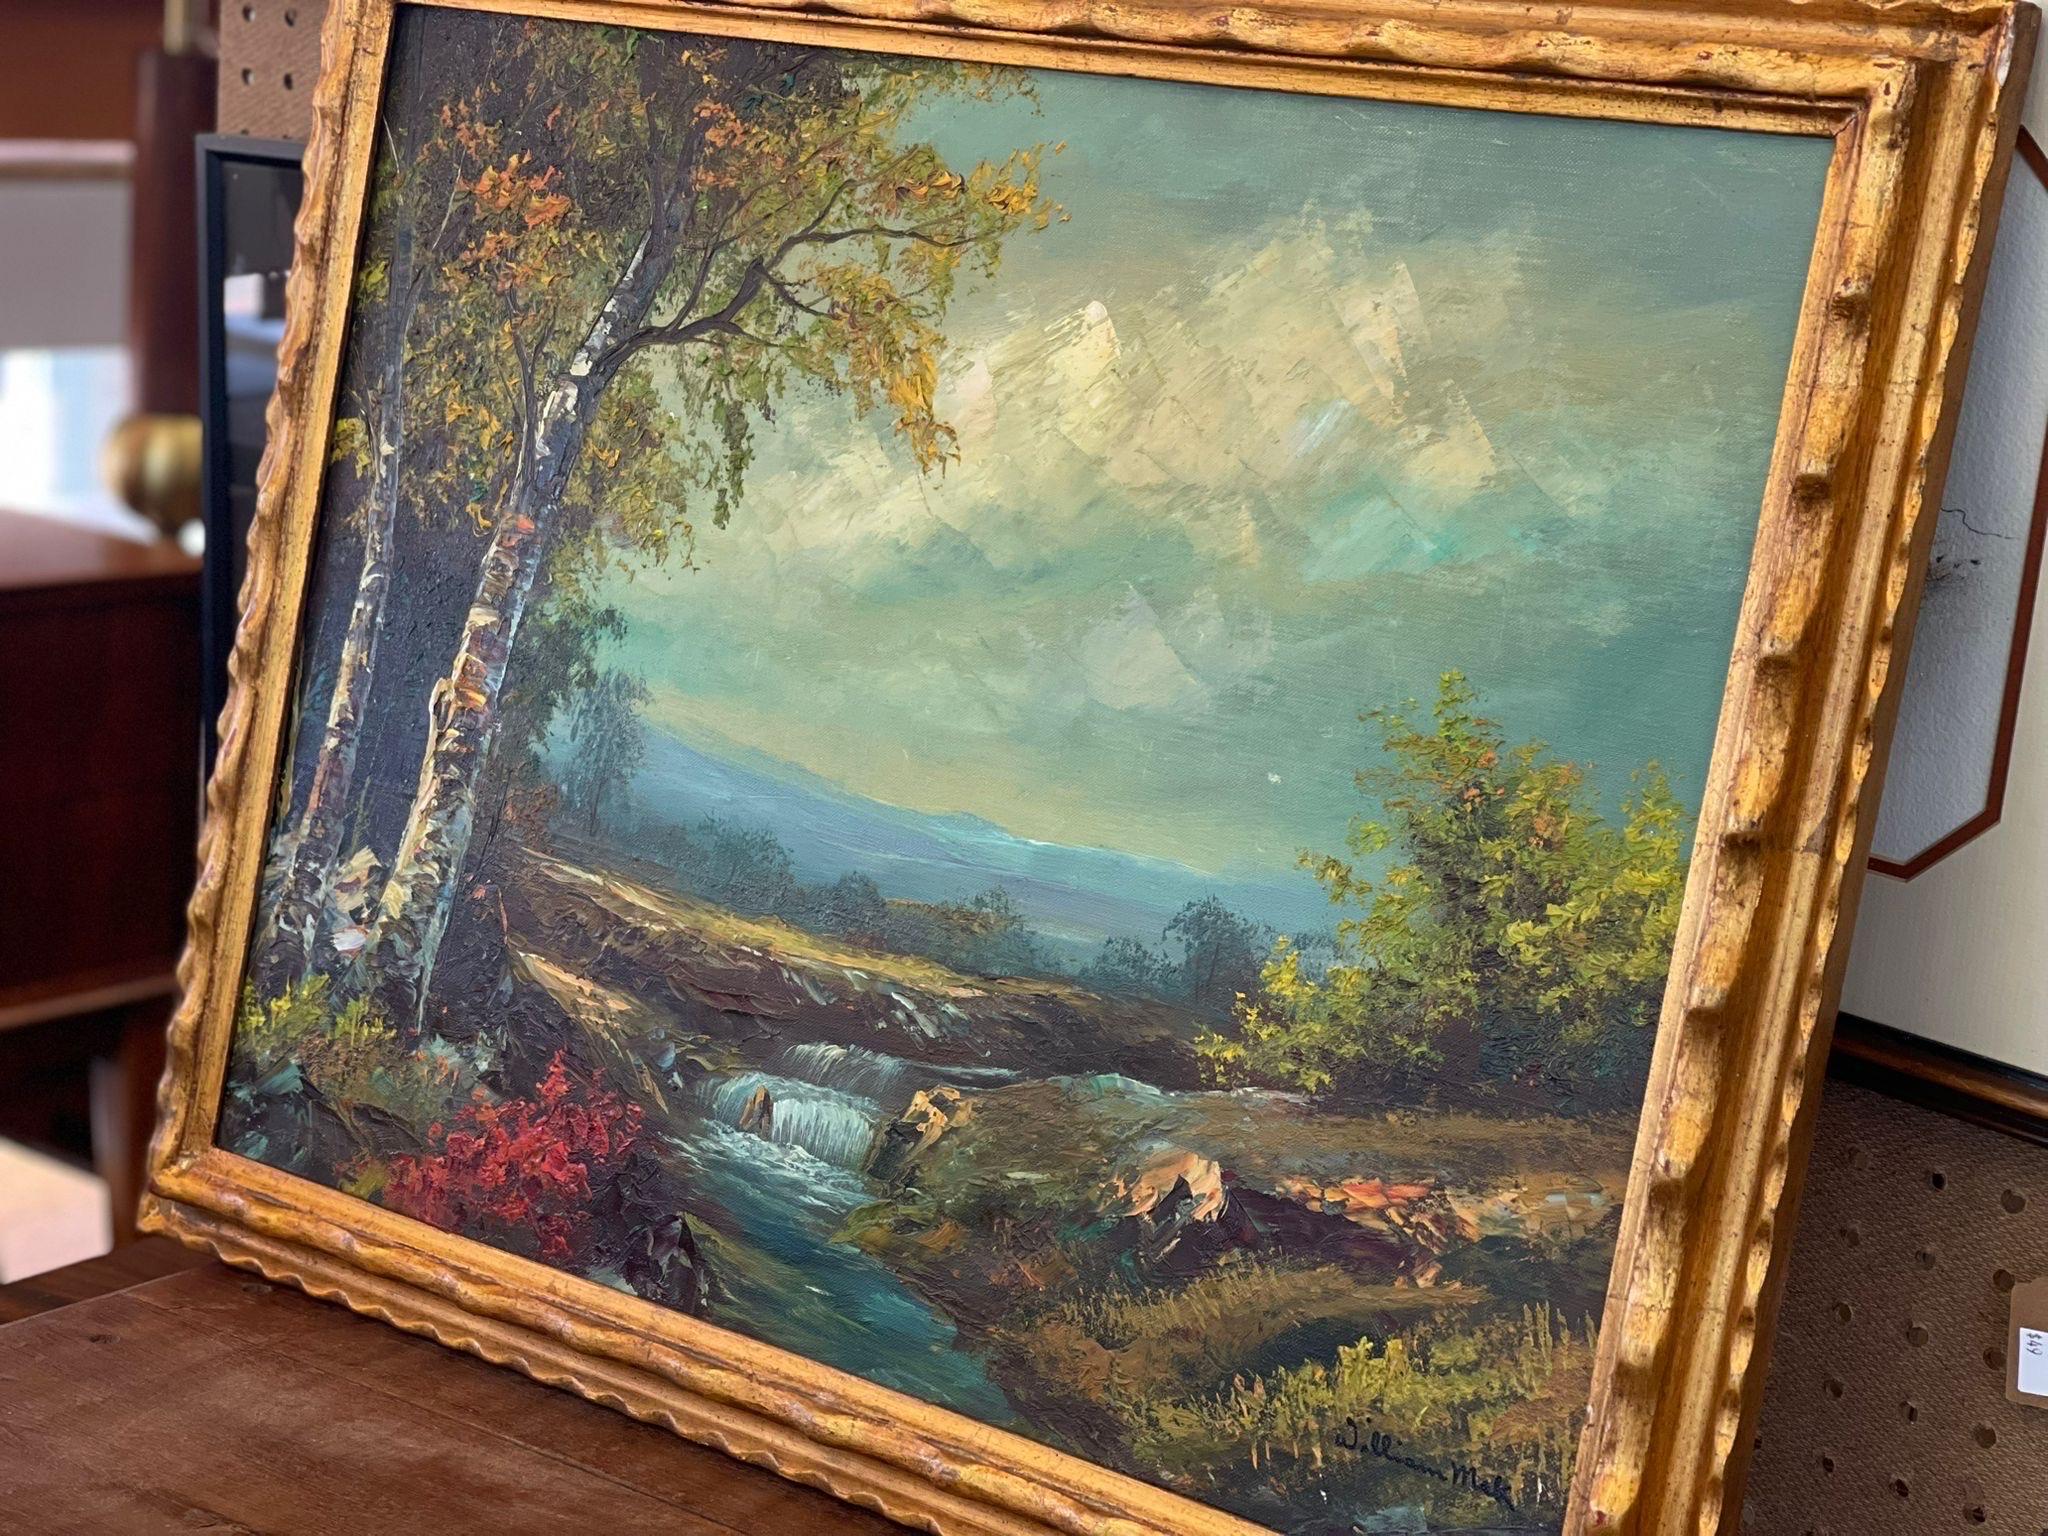 Wood Vintage Framed and Signed Original Painting of Vibrant Scenic Landscape. For Sale